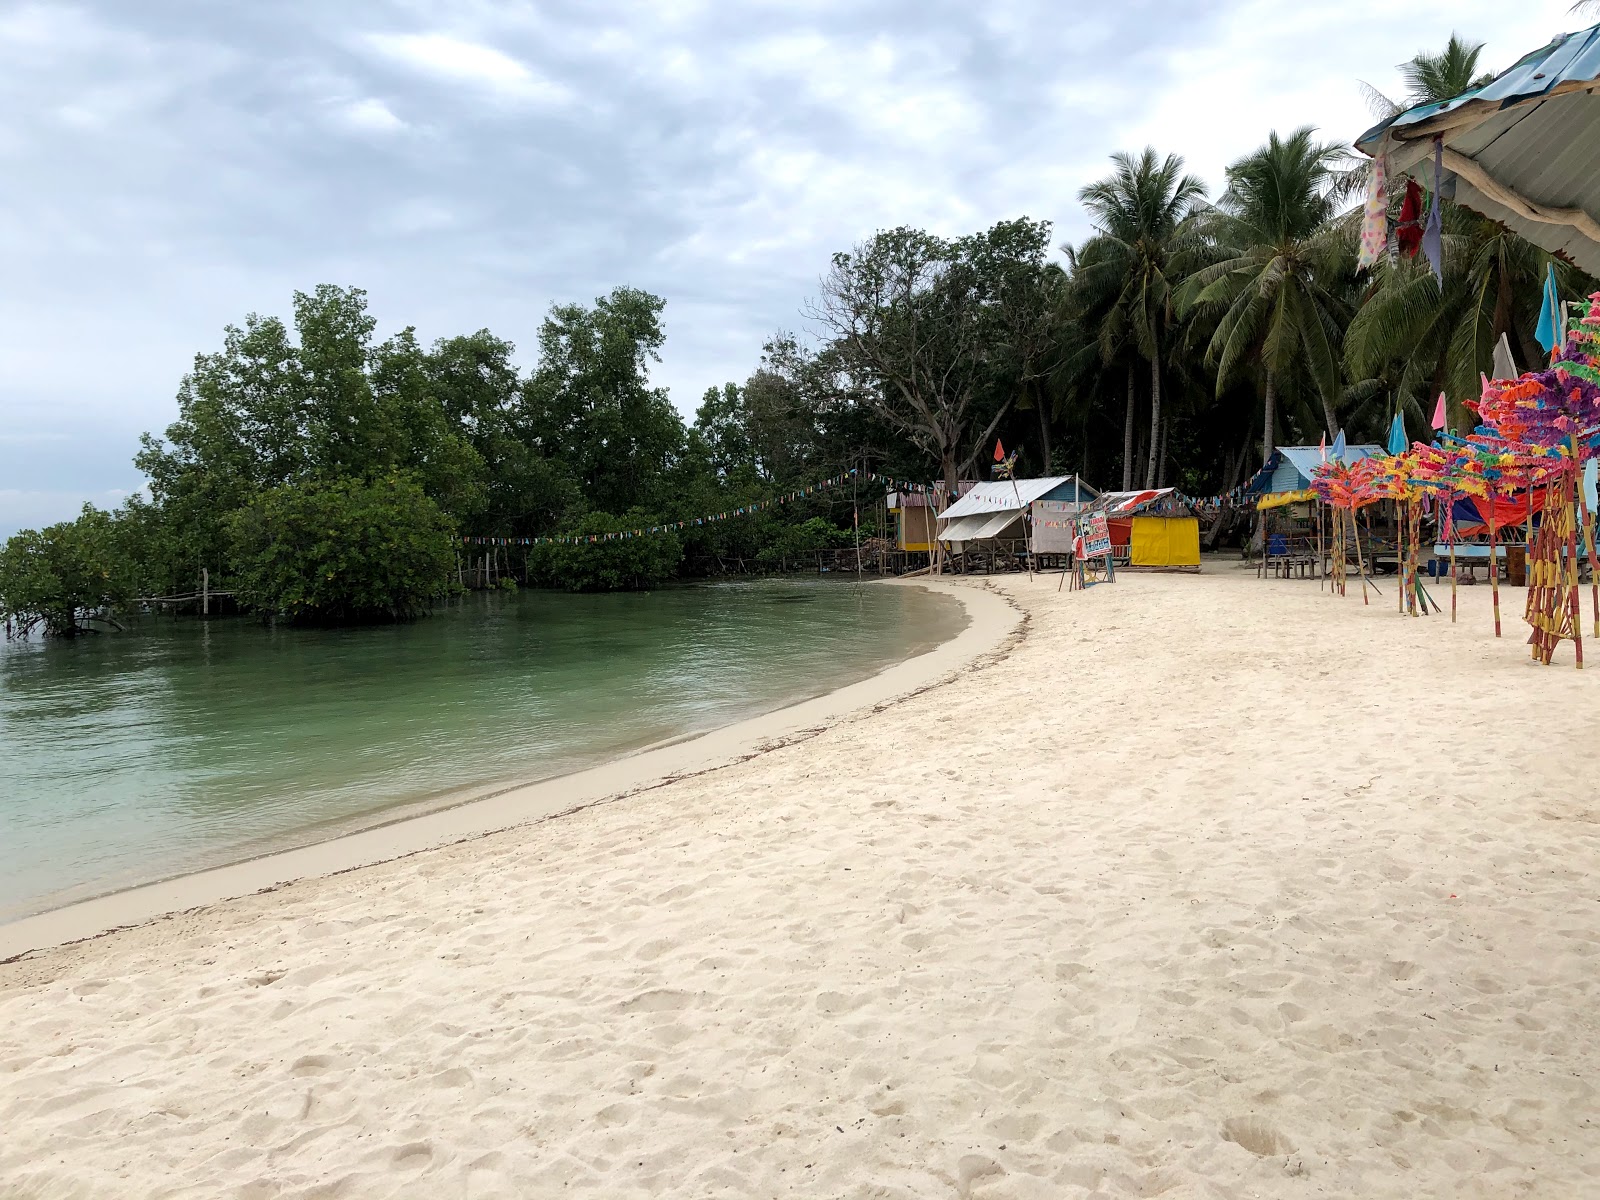 Foto di Wisata Pulau Mubut Darat con una superficie del sabbia luminosa